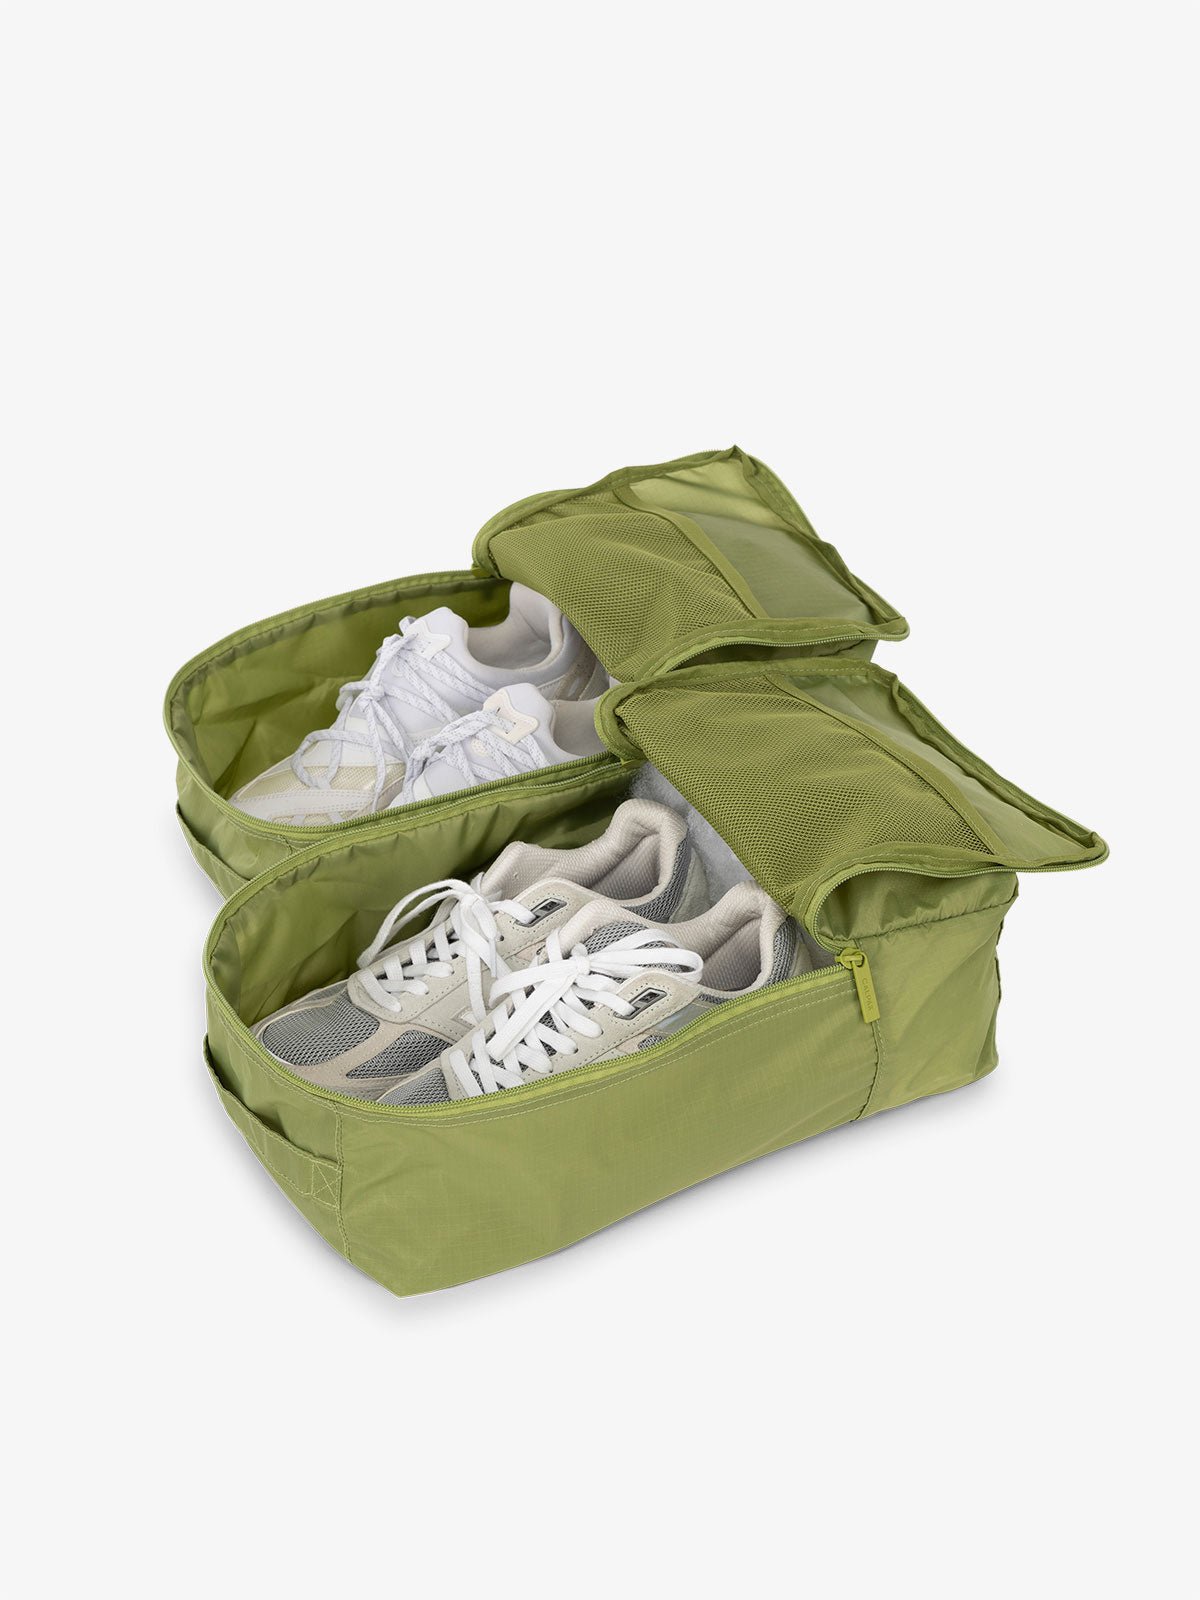 CALPAK Compakt shoe bag set with mesh pockets for travel in green palm